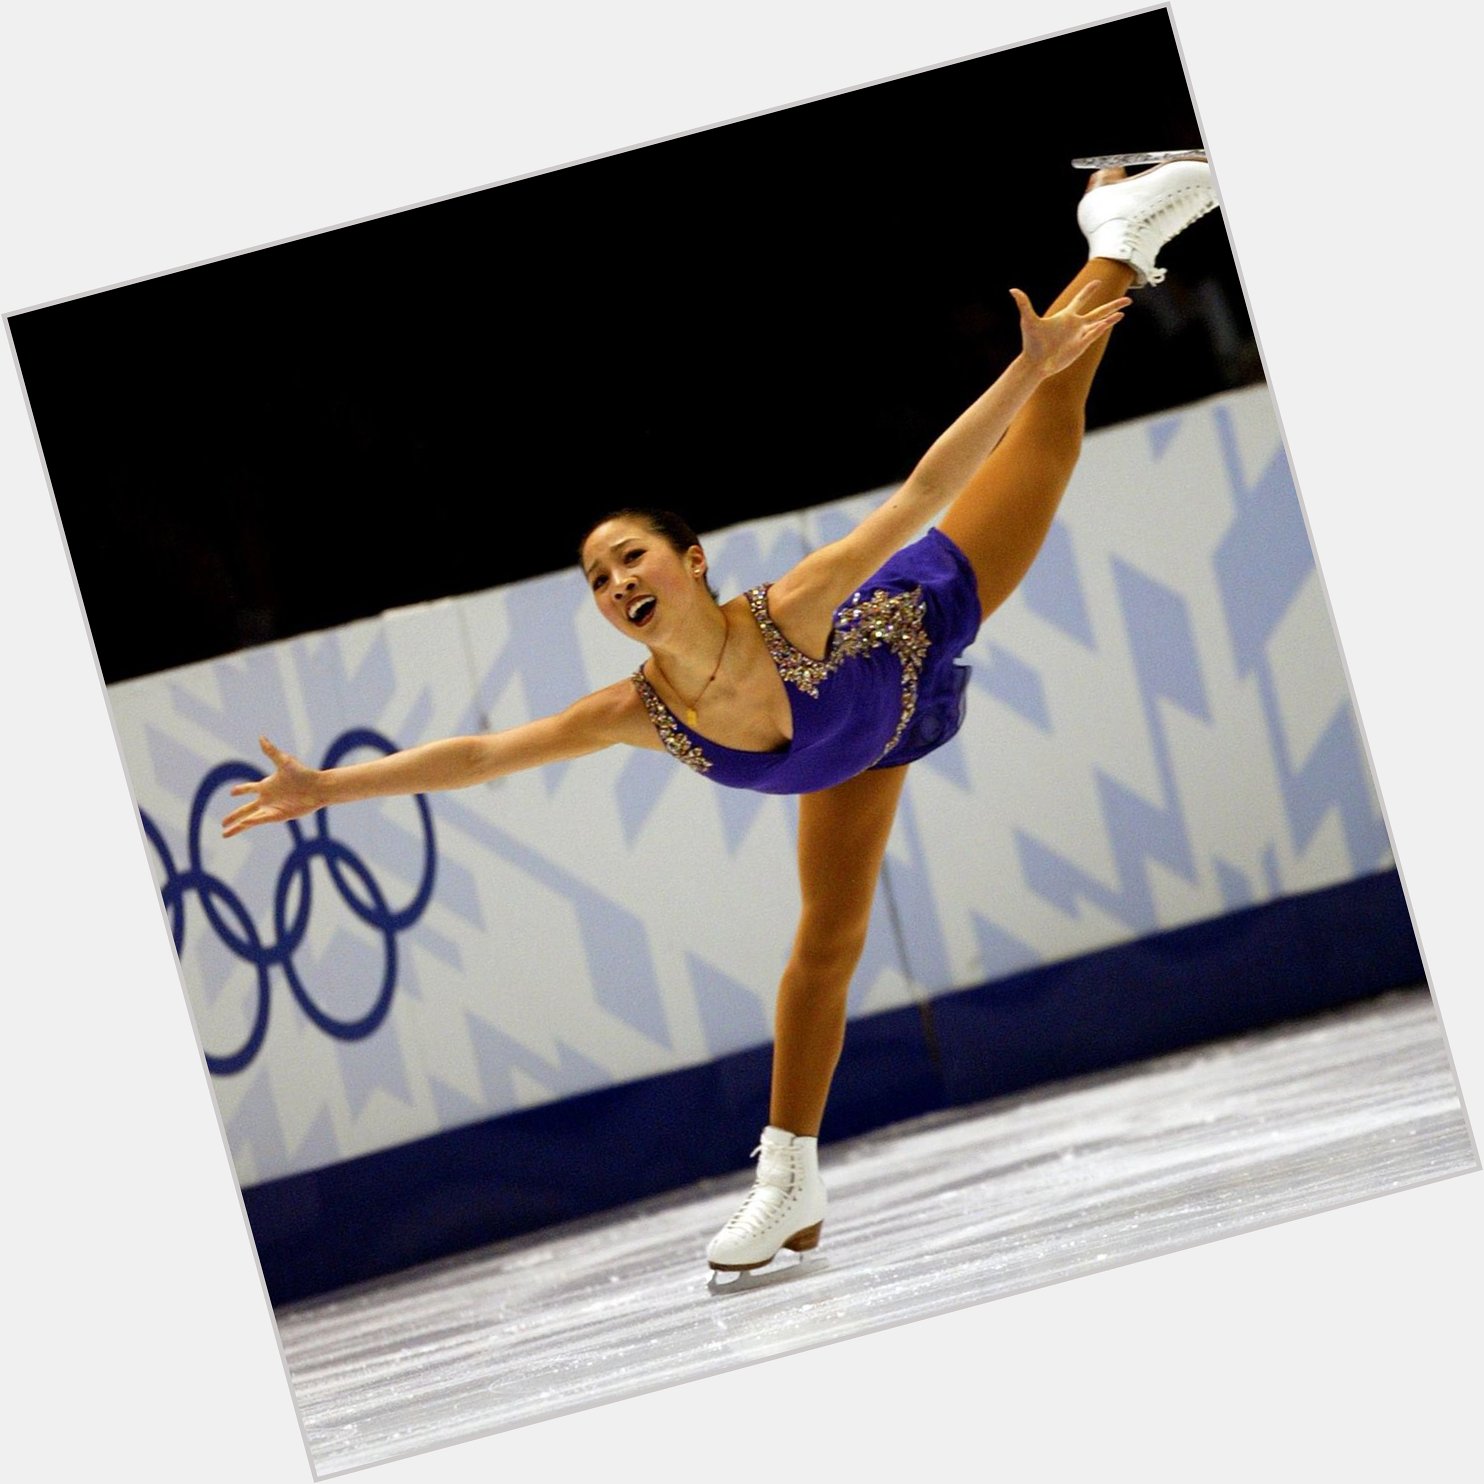 Happy 42nd Birthday to retired figure skater, Michelle Kwan! 